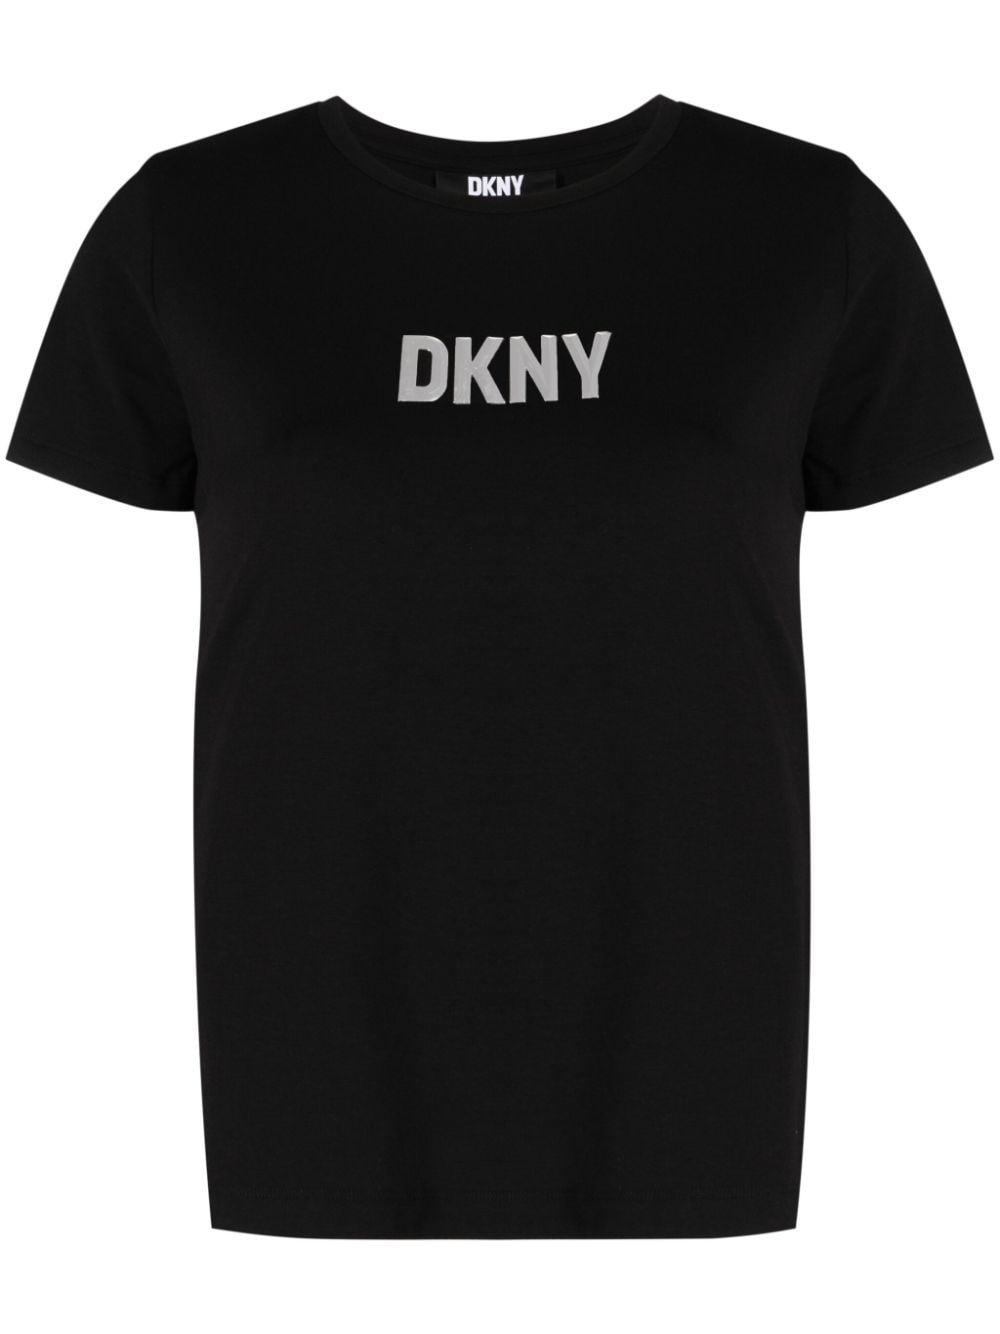 DKNY T-Shirt mit Logo - Schwarz von DKNY